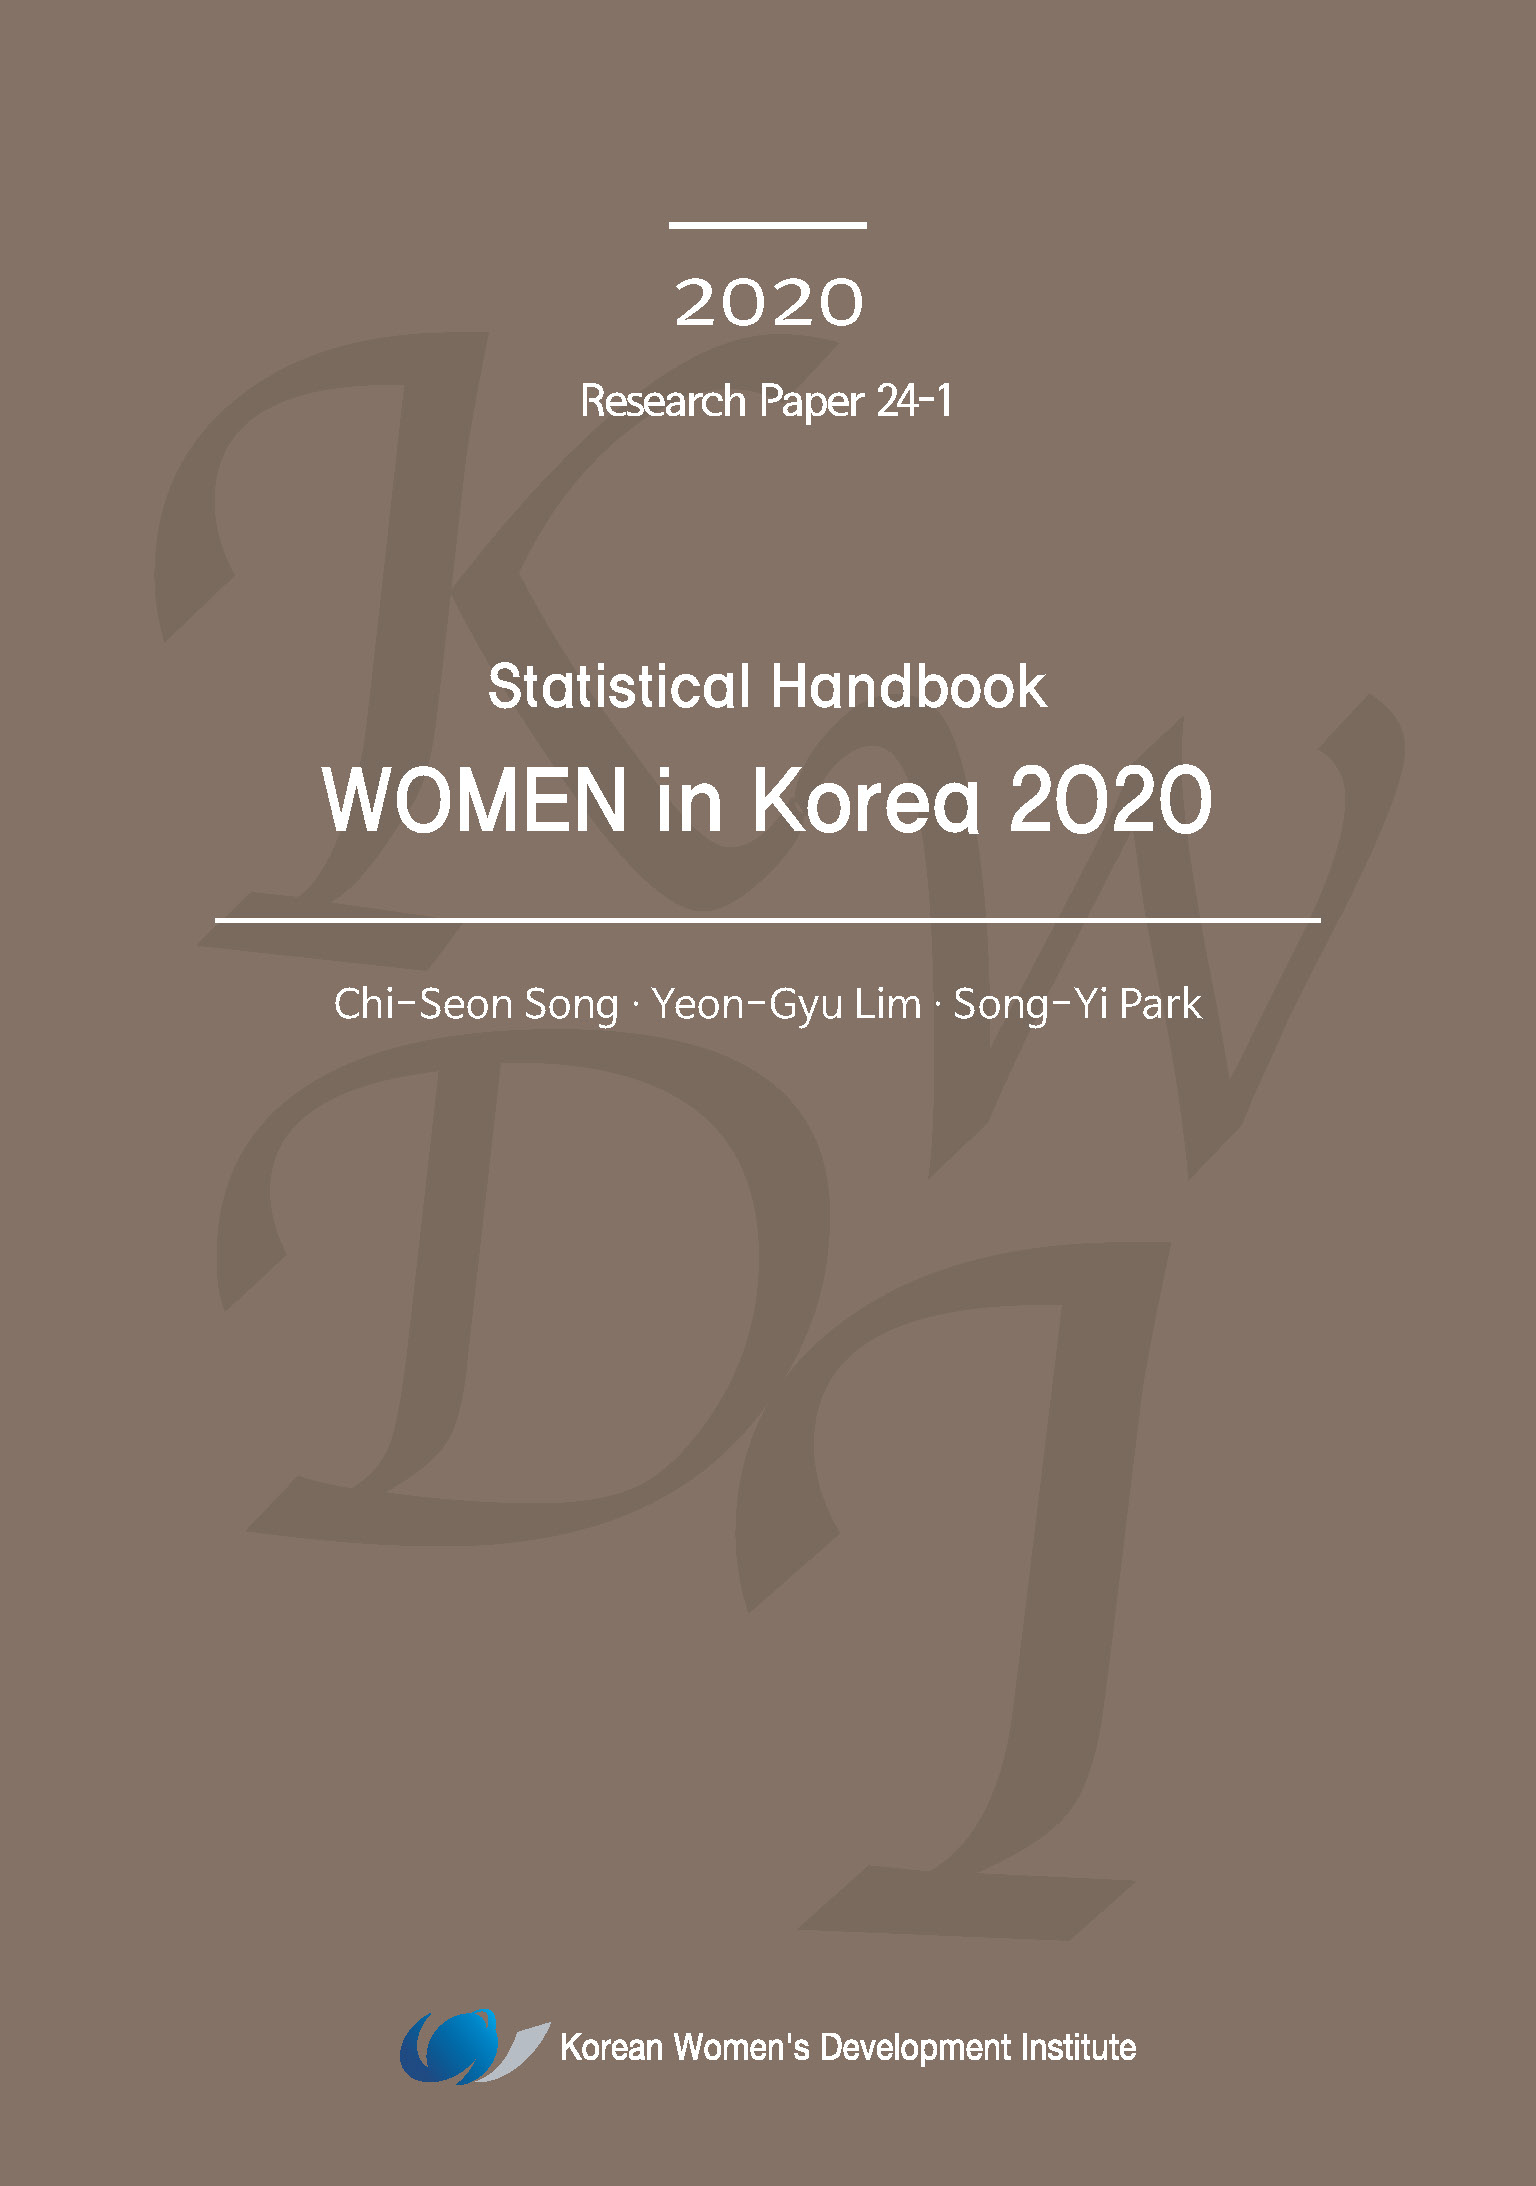 Statistical Handbook: Women in Korea 2020